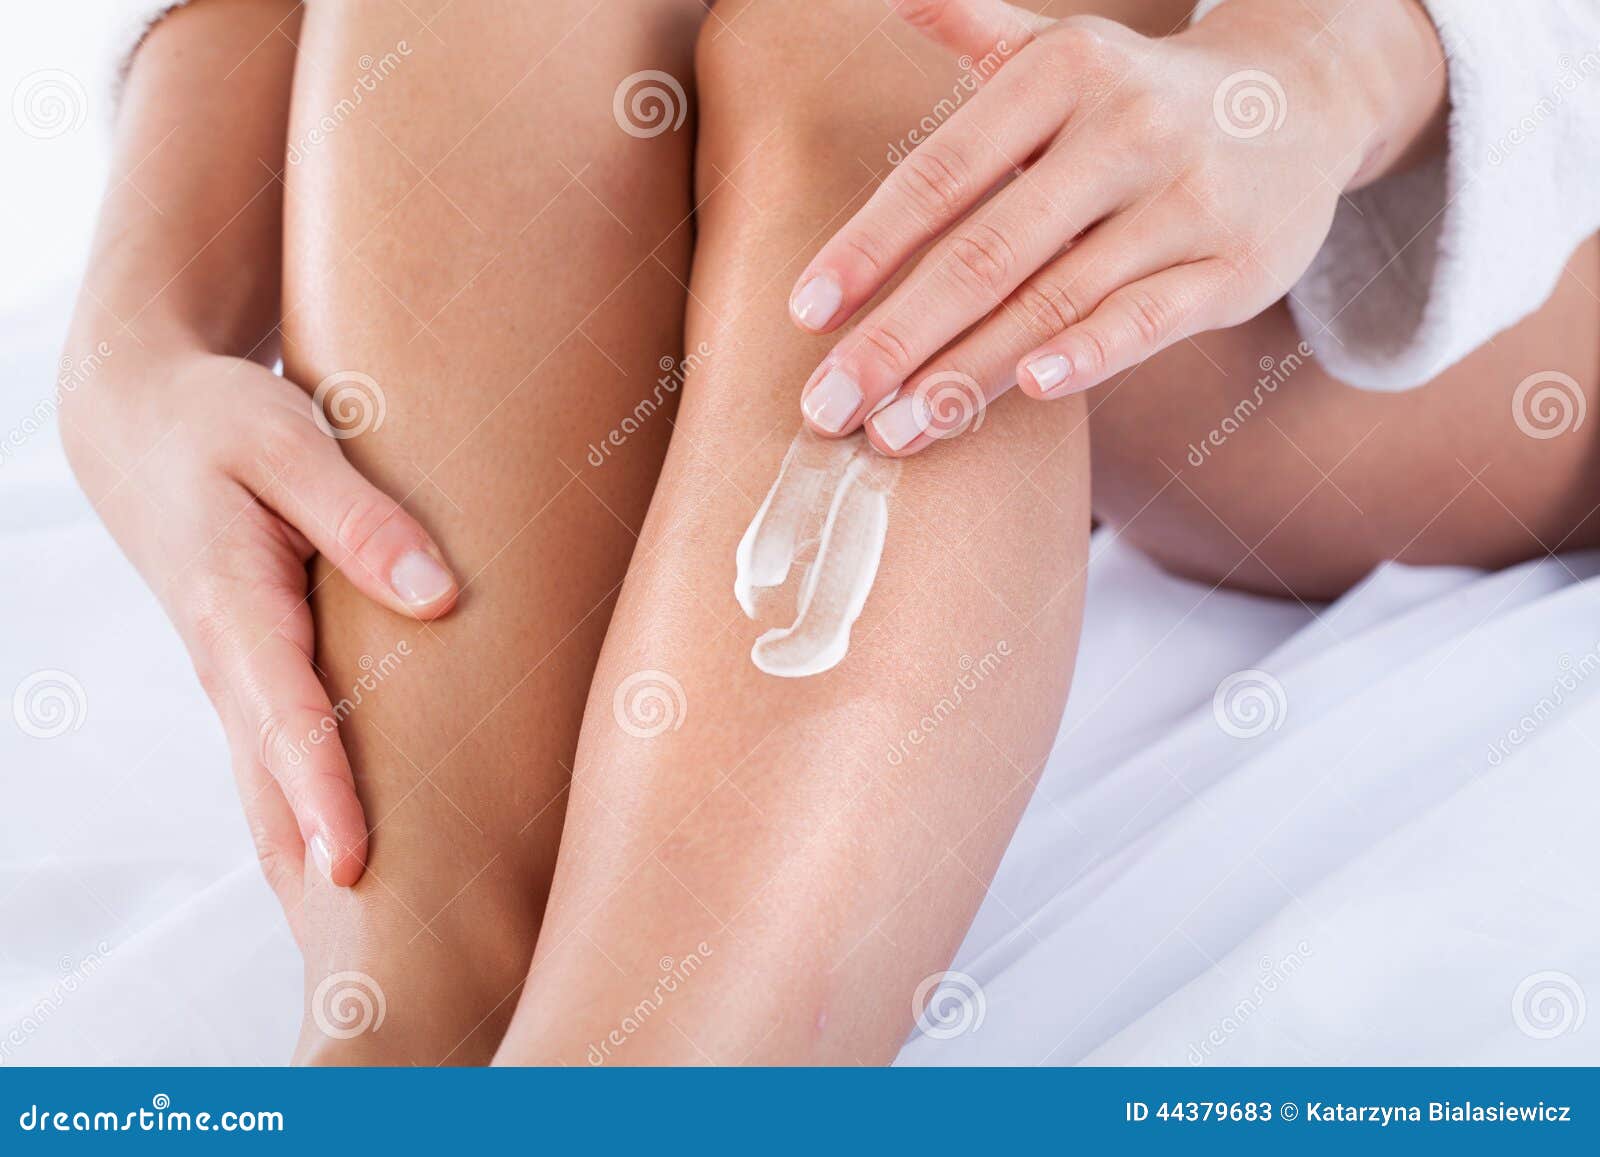 woman applying body lotion on skin